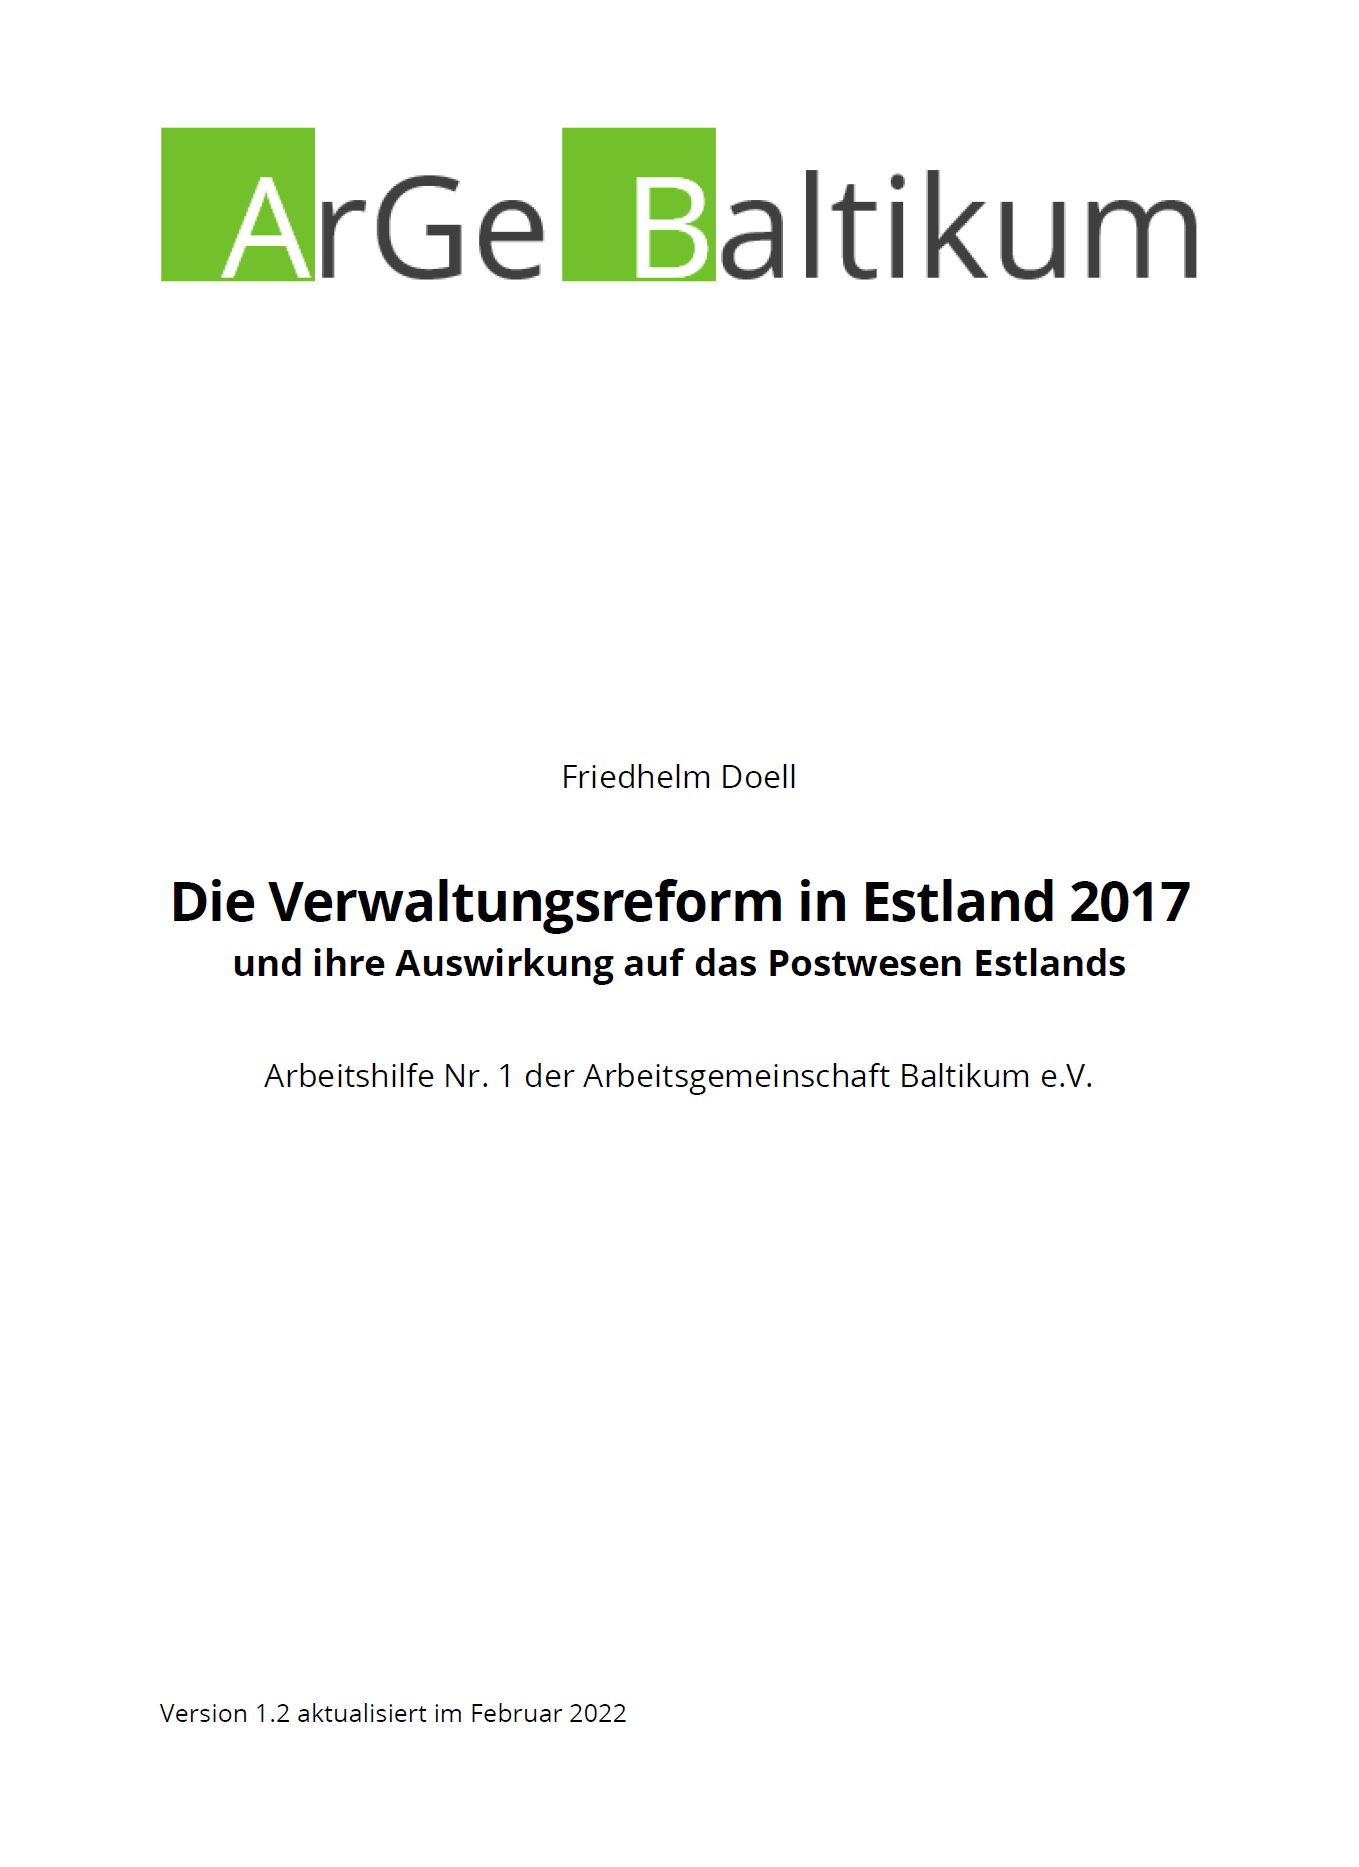 Book title Arbeitshilfe Nr.1: The Administrative Reform in Estonia 2017